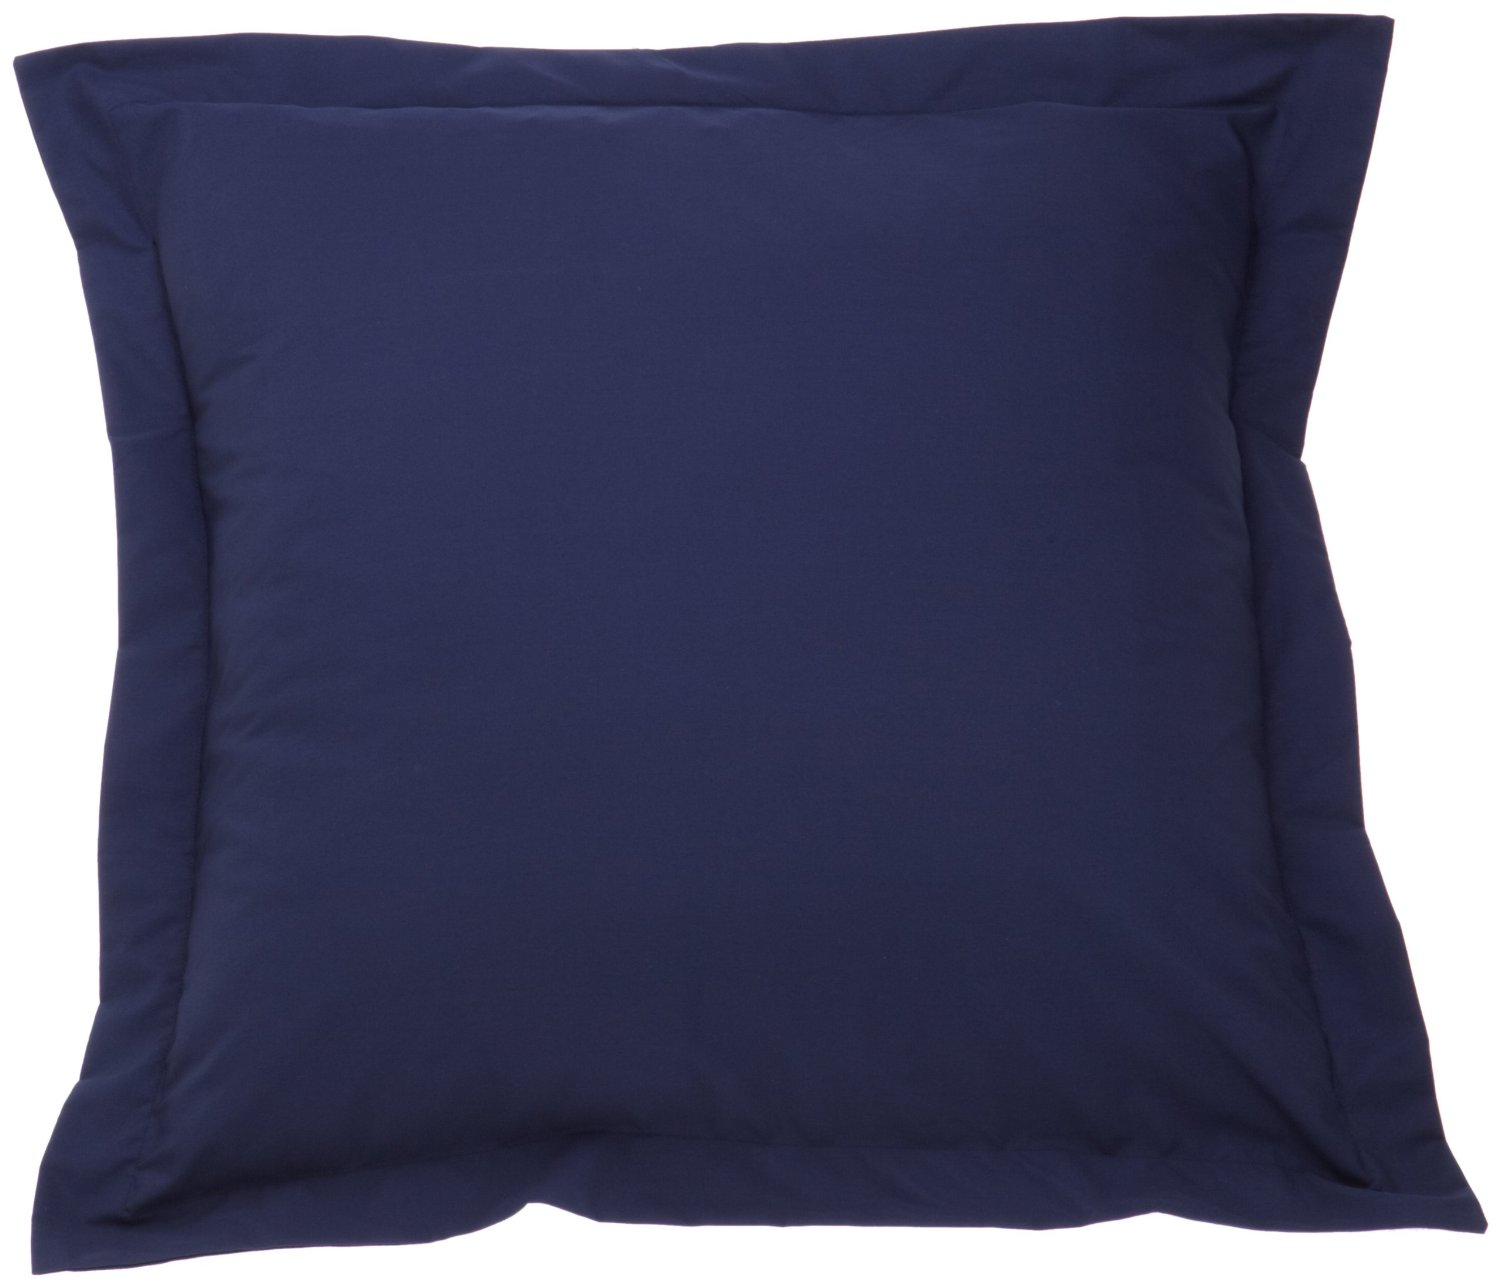 Calking Navy Blue Pillow Shams Egyptian Cotton 1000TC - FREE Shipping